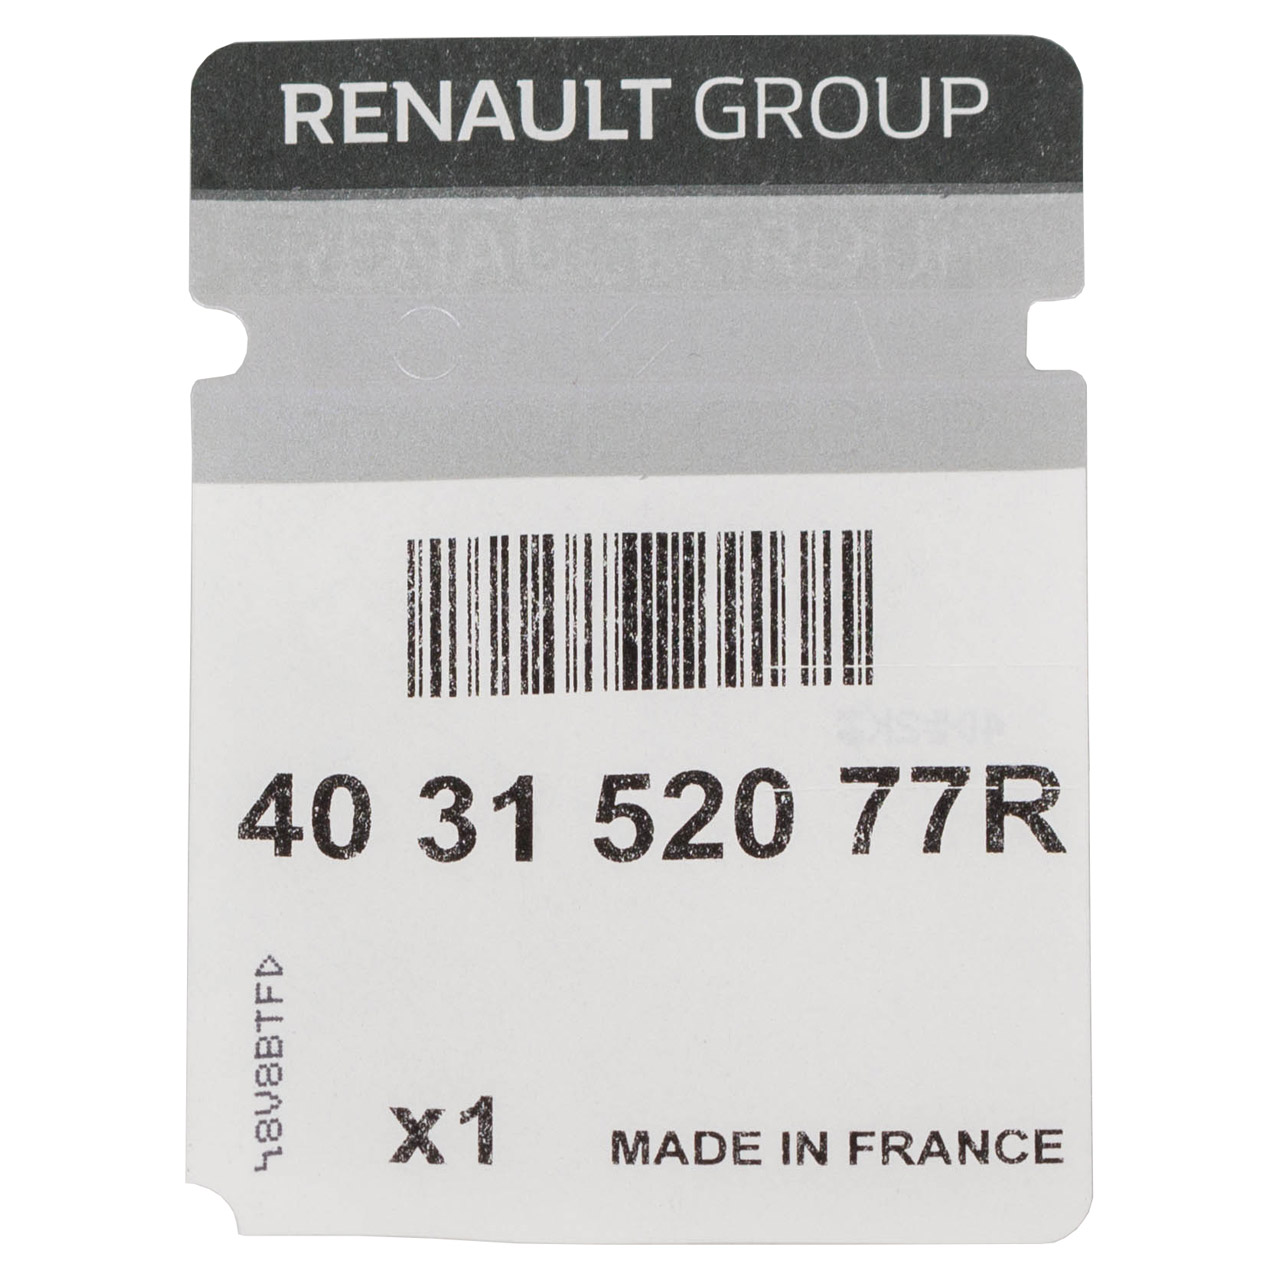 1x ORIGINAL Renault Radkappe Radblende 20 Zoll Silber Grand / Scenic 4 403152077R